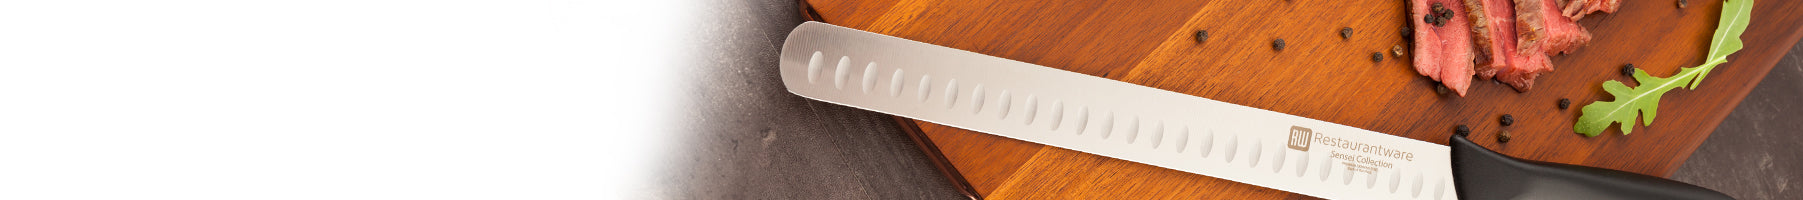 Banner_Smallwares_Kitchen-Knives_Cutlery_Slicing-Knives_247